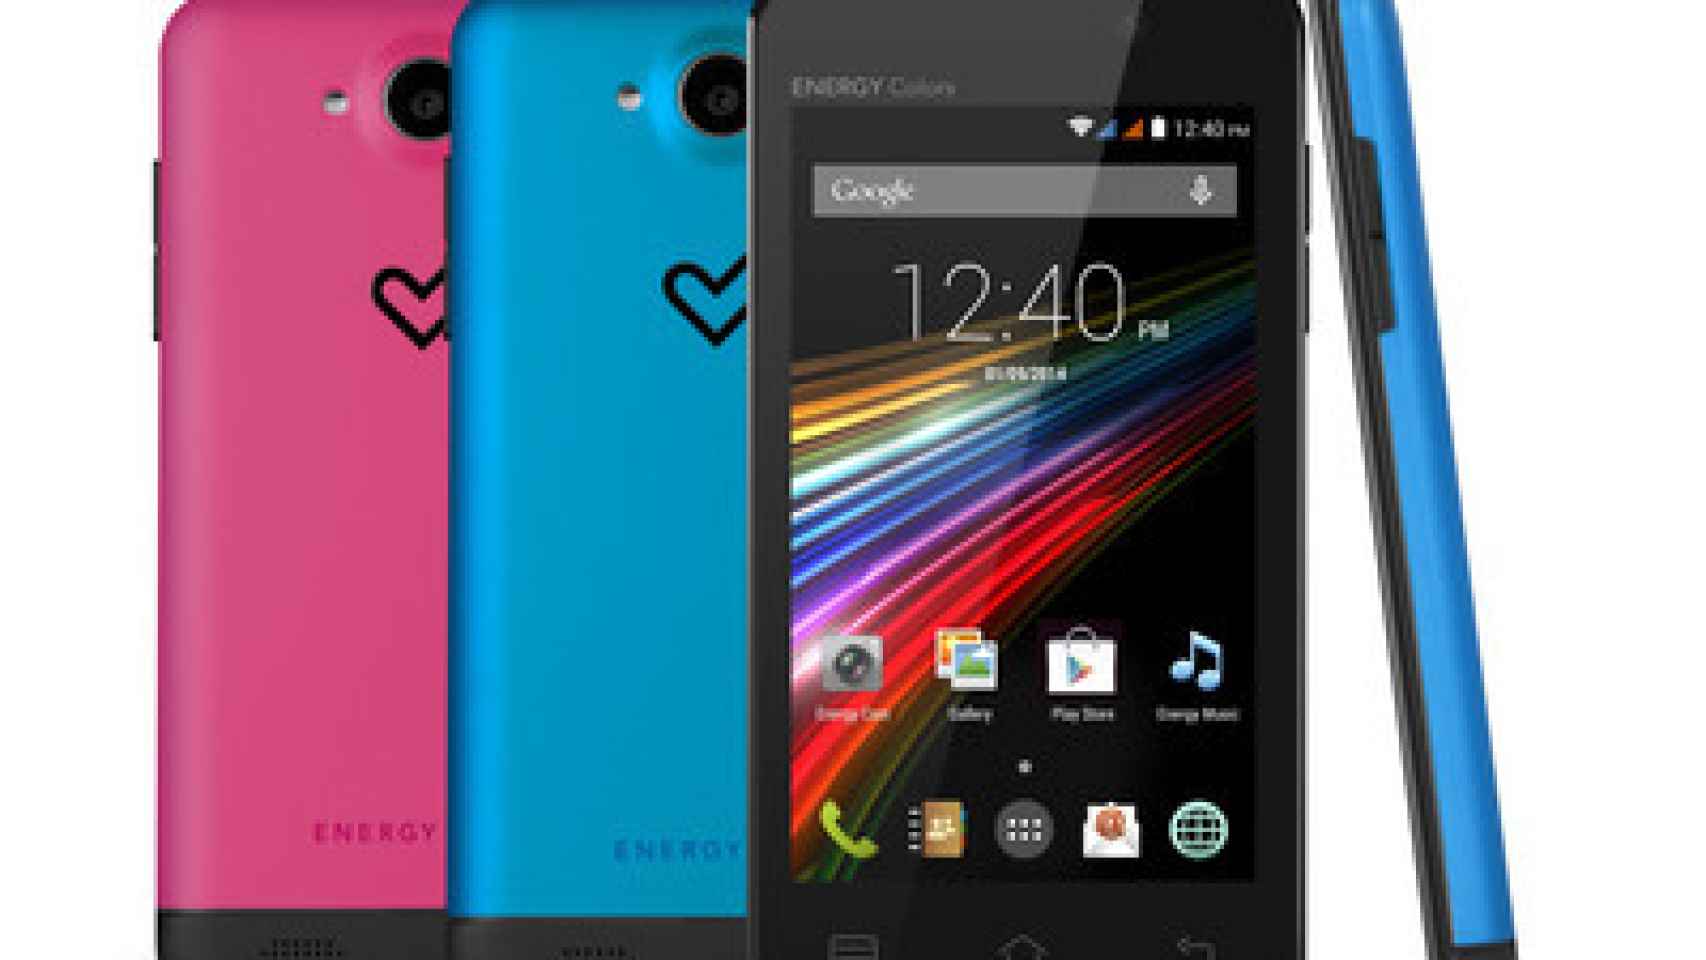 Energy Phone Colors, el smartphone Android de 59€